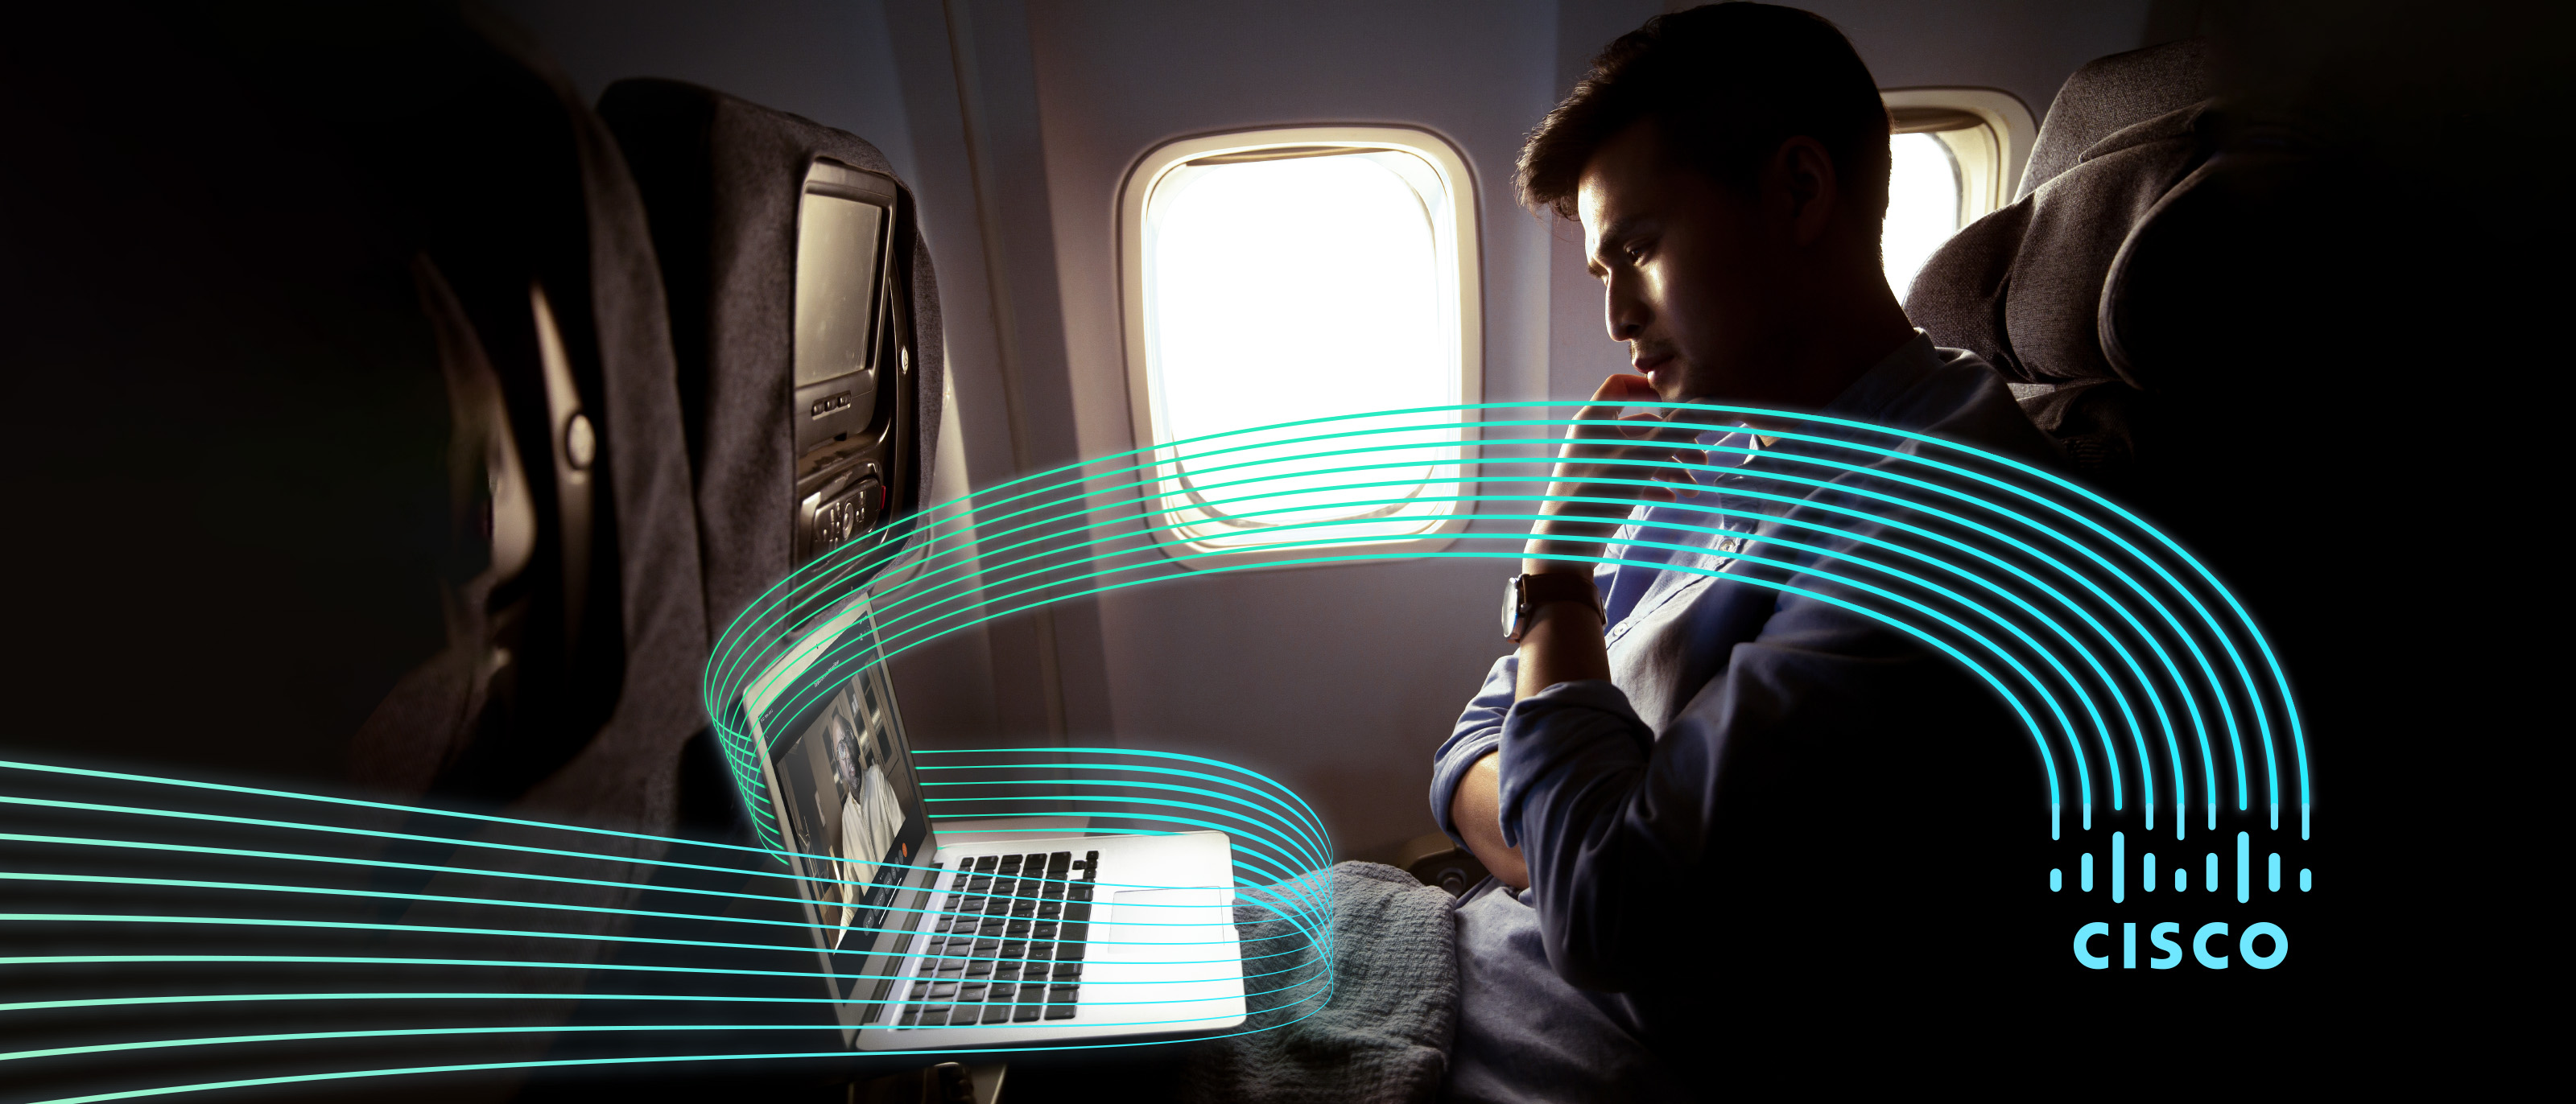 From an aeroplane seat man views laptop screen wrapped in Cisco logo